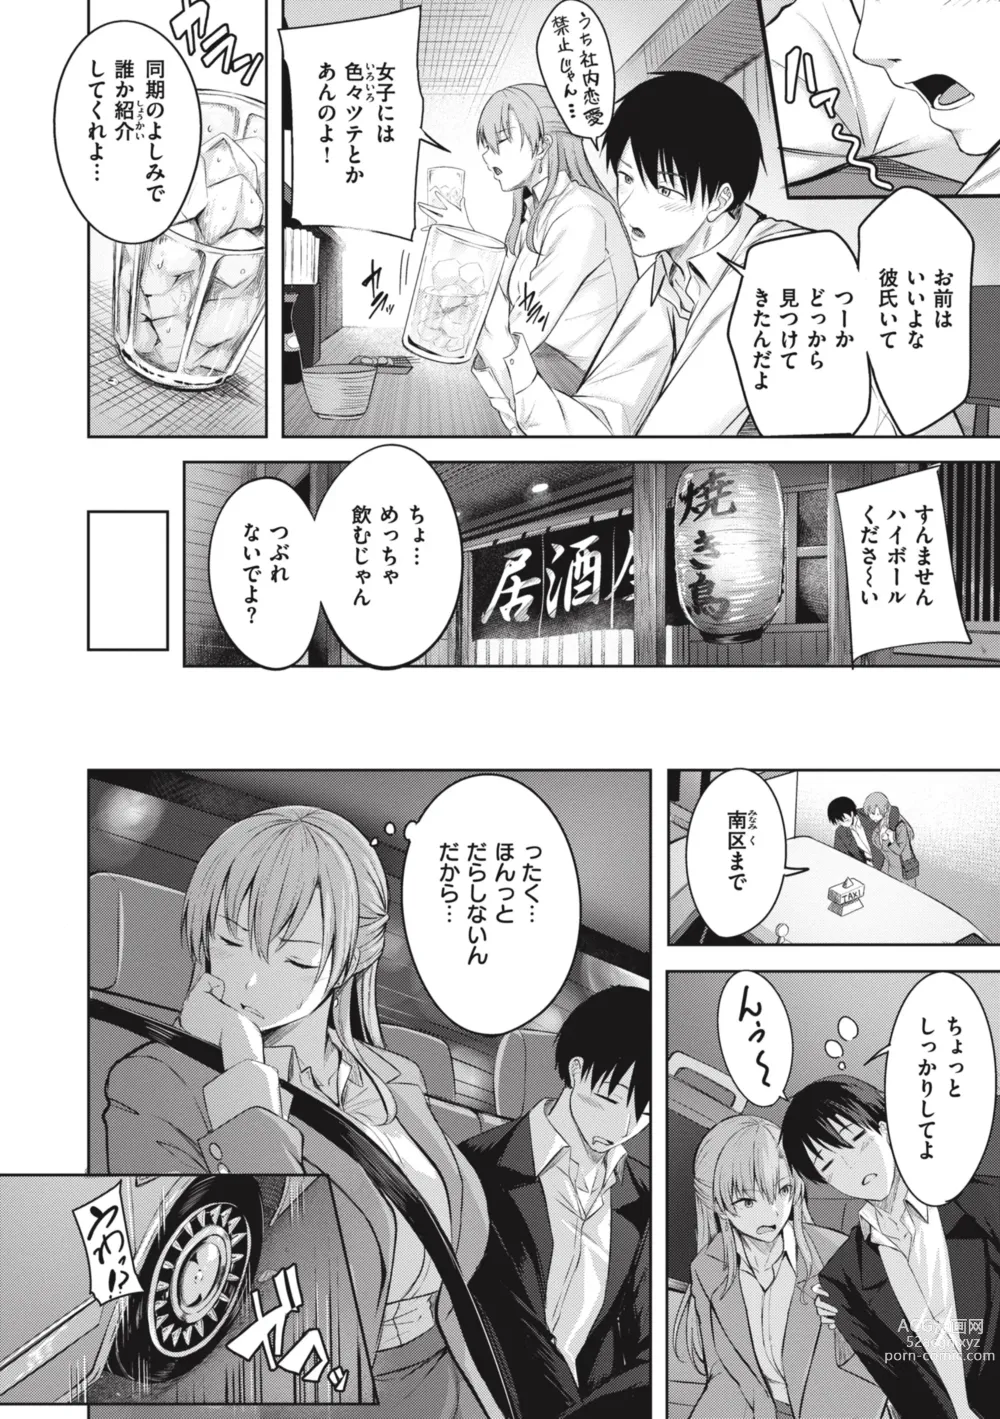 Page 4 of manga Hajirai Love Range